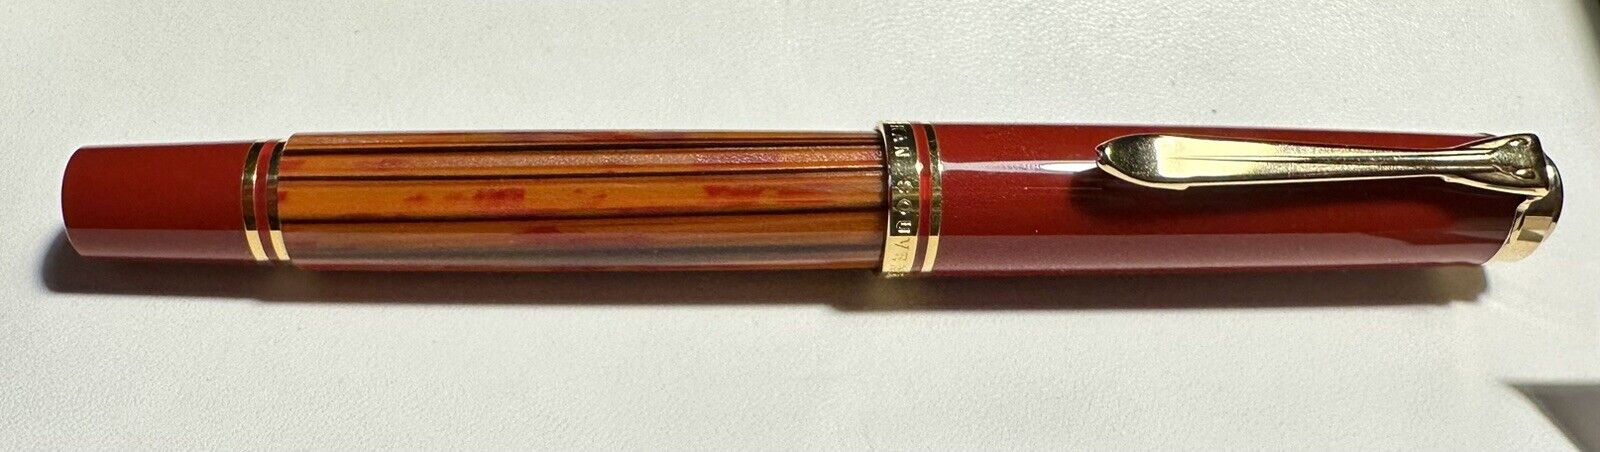 Pelikan Fountain Pen Tortoiseshell Red Souverän M600 14C-585 F Nib